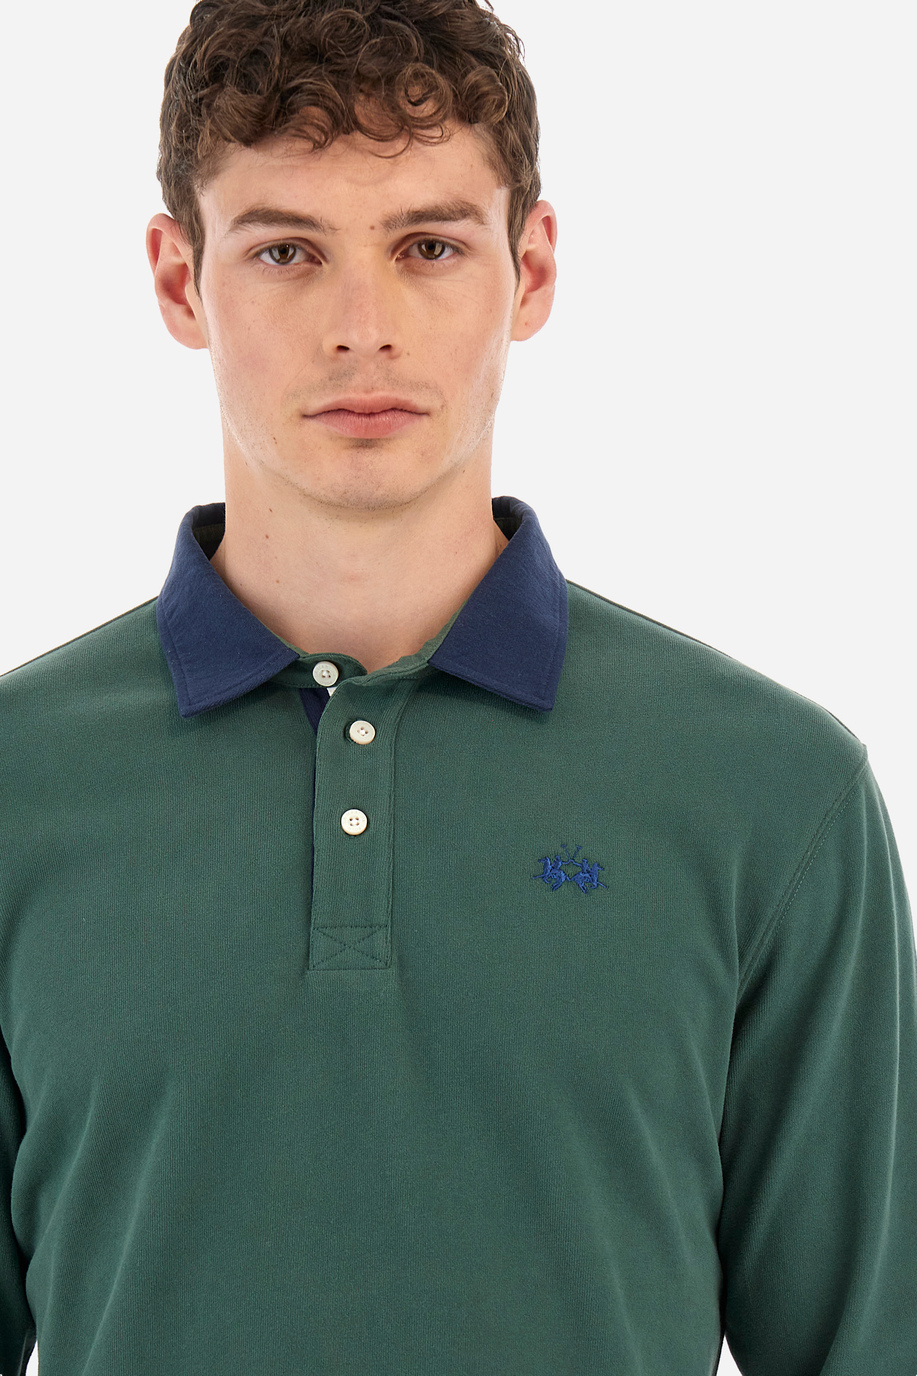 Man polo shirt in regular fit - Waller - Polo Shirts | La Martina - Official Online Shop